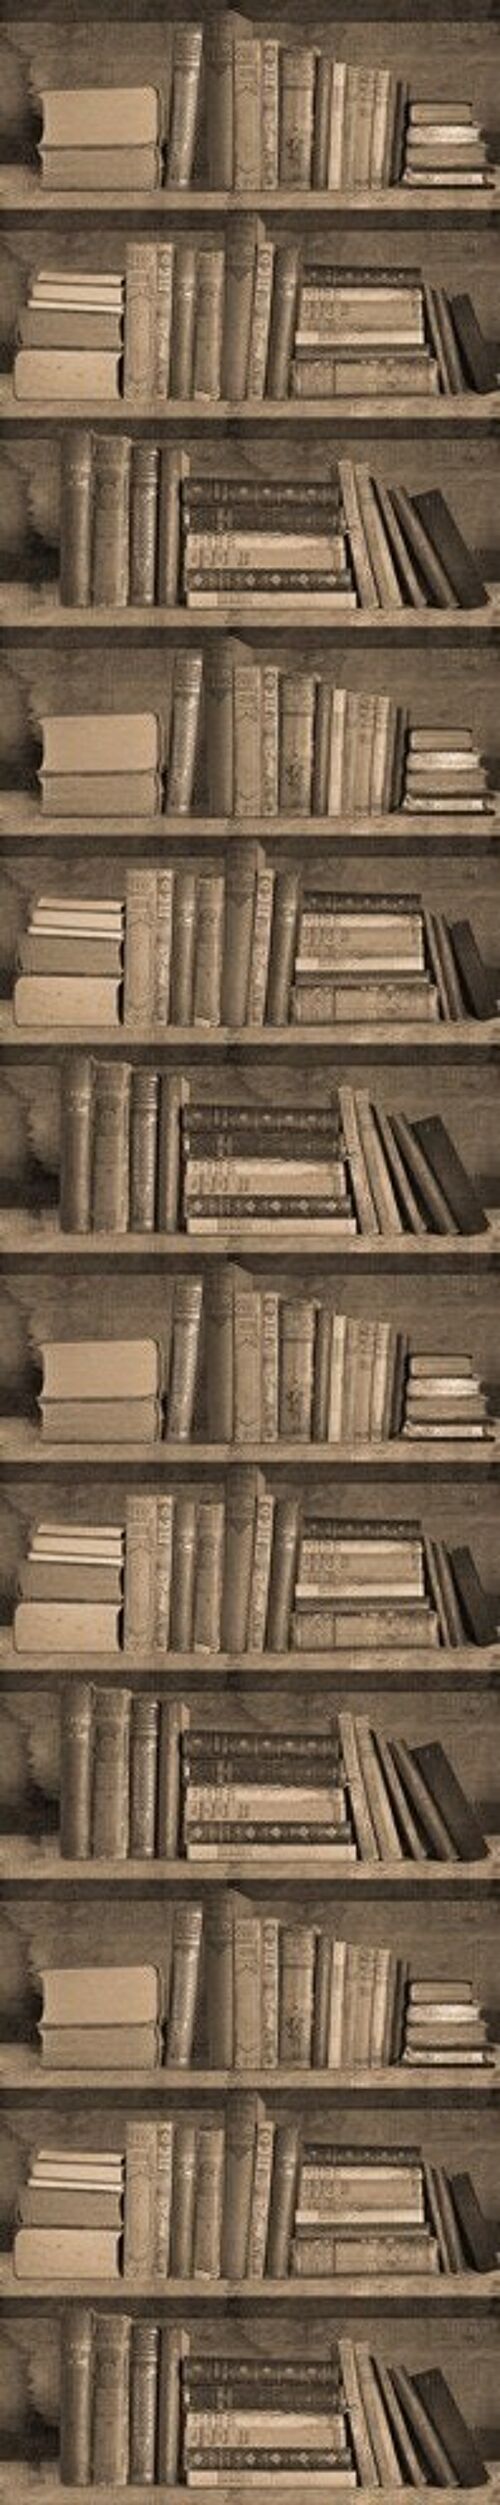 Sepia Bookshelf Wallpaper